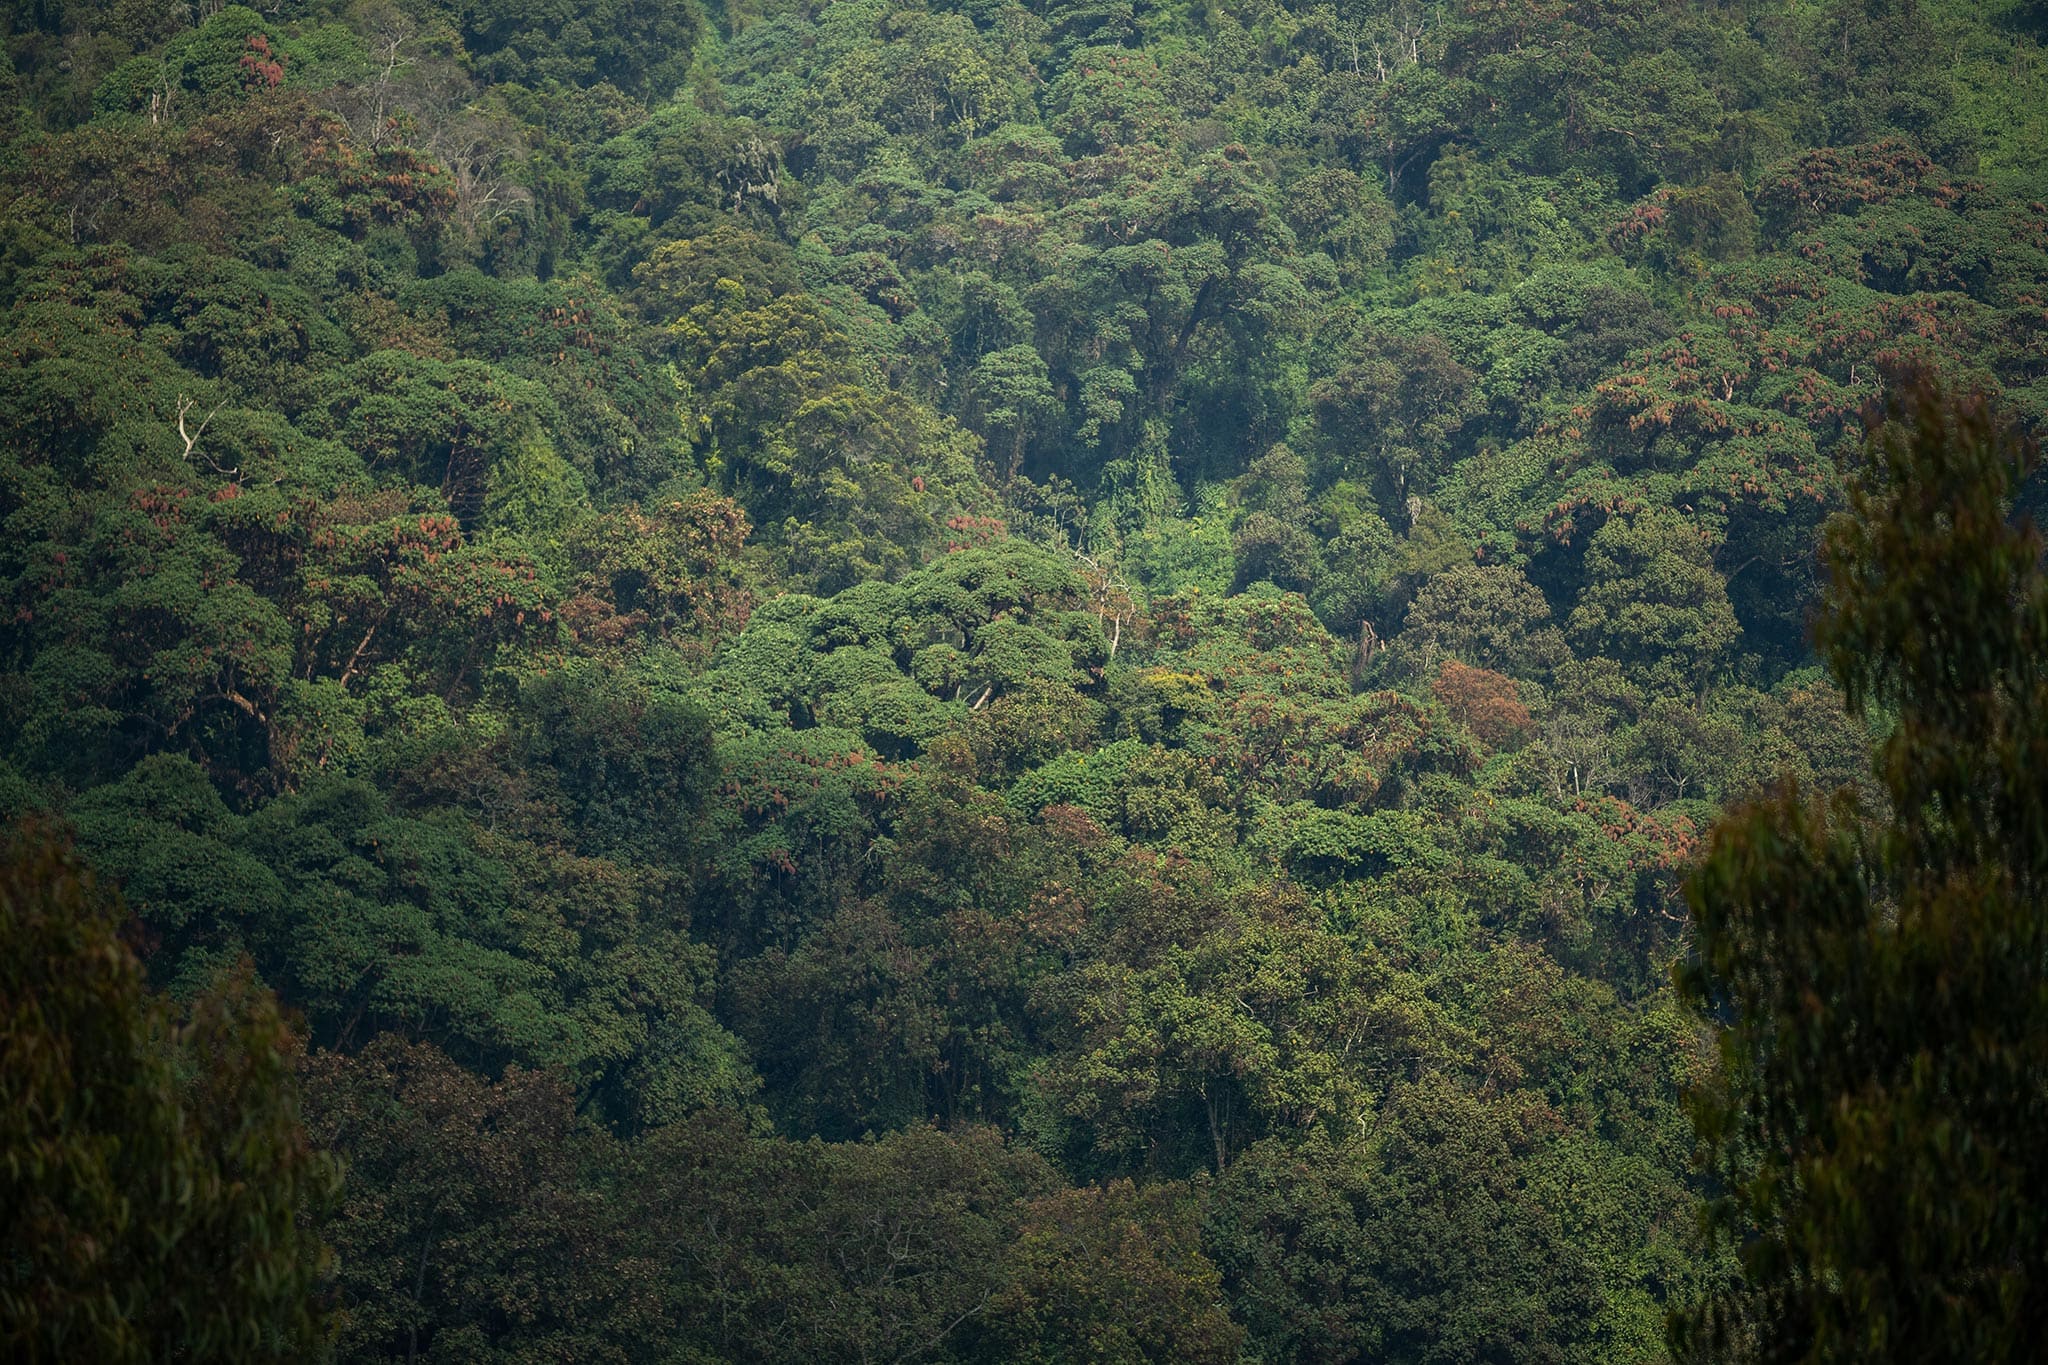 Dense rainforest in Rwanda